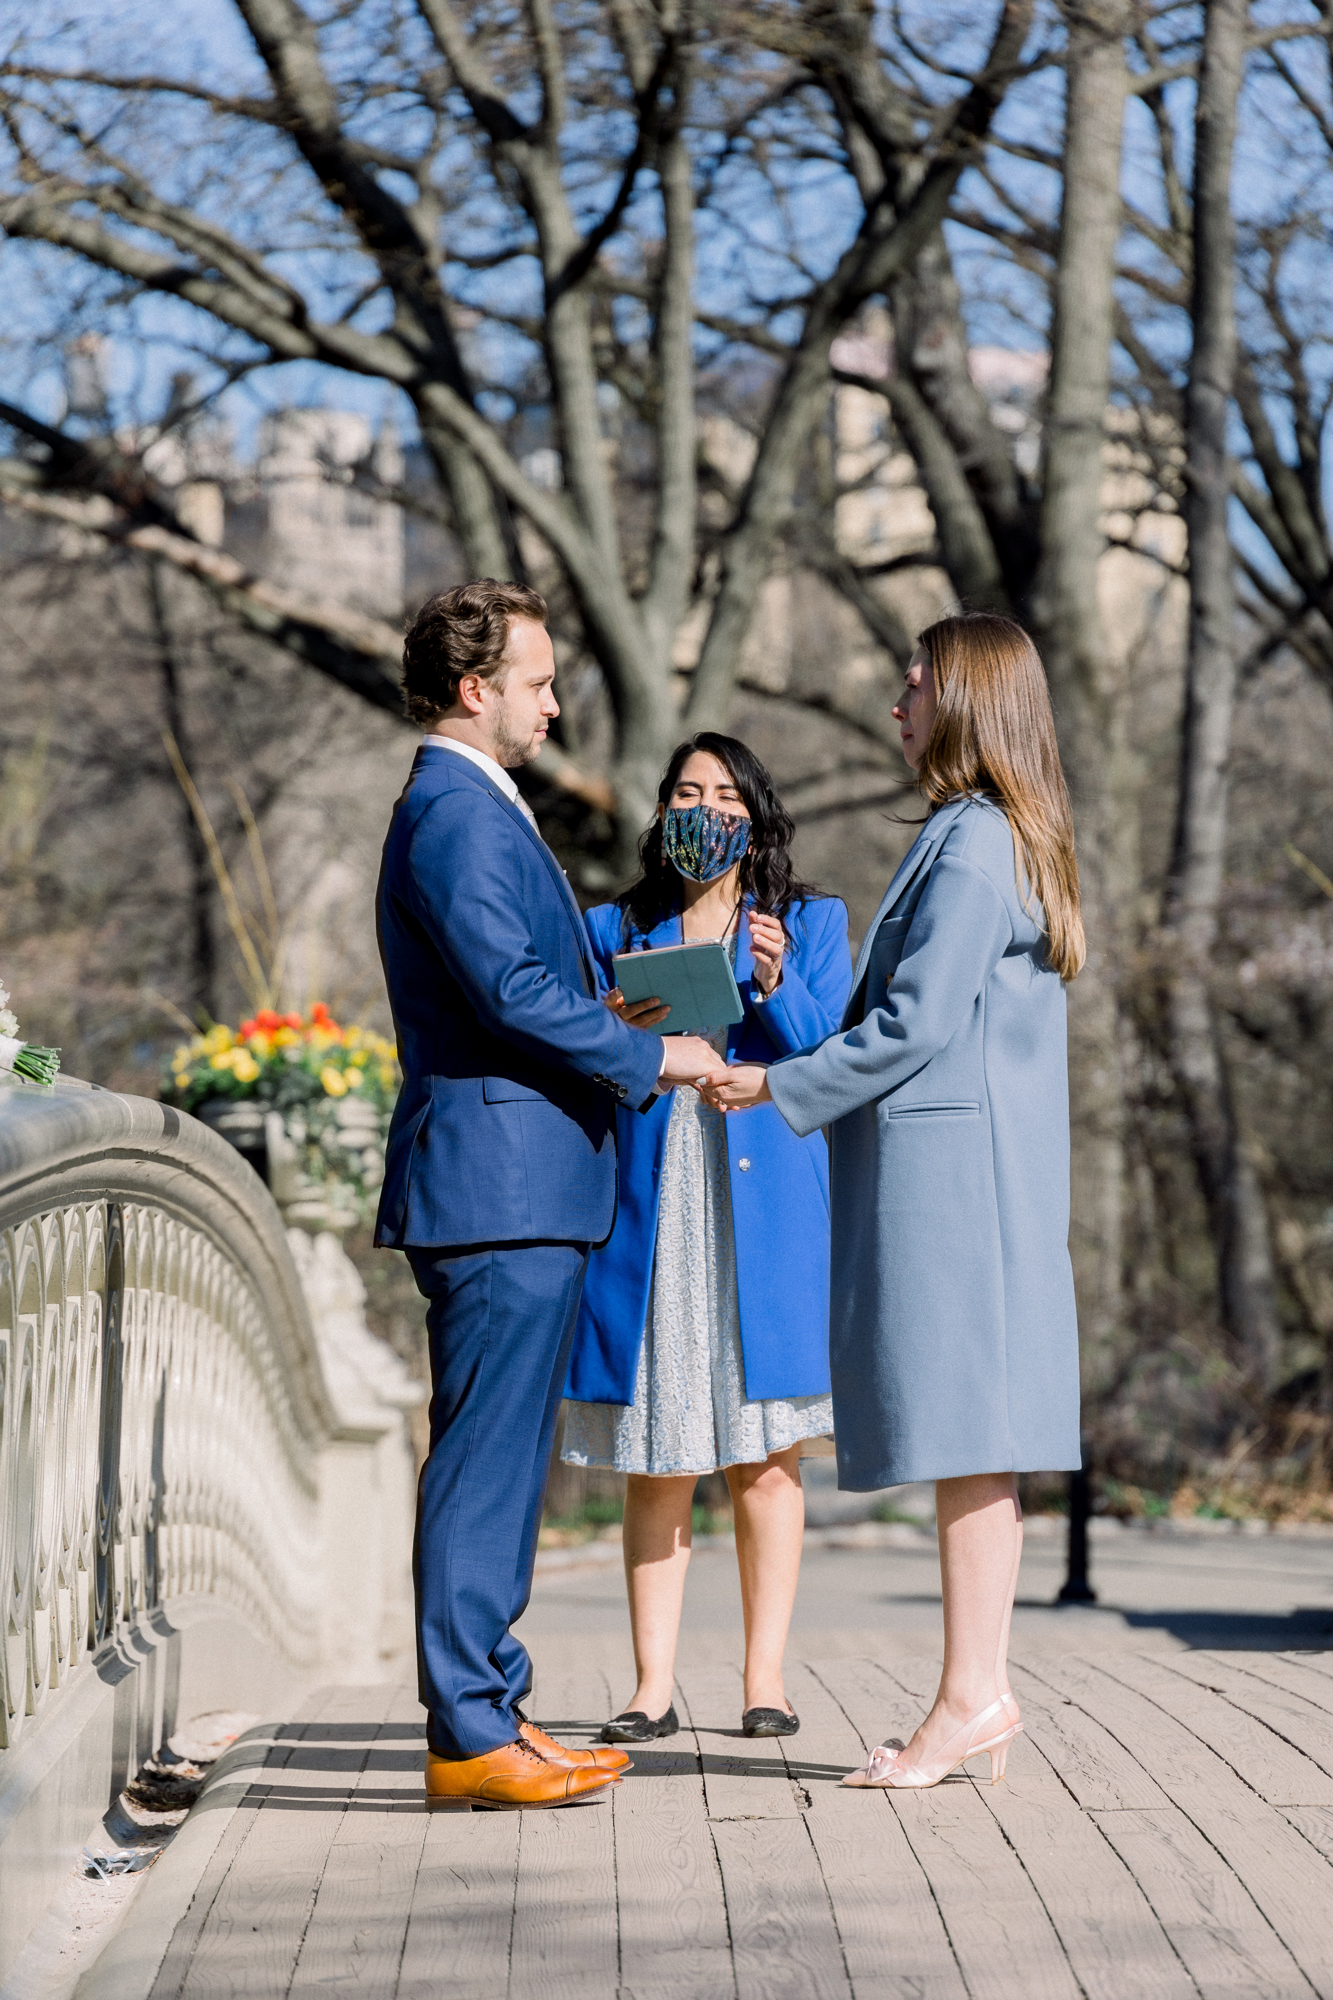 Charming Bow Bridge Wedding Photos Among Central Park's Spring Cherry Blossoms